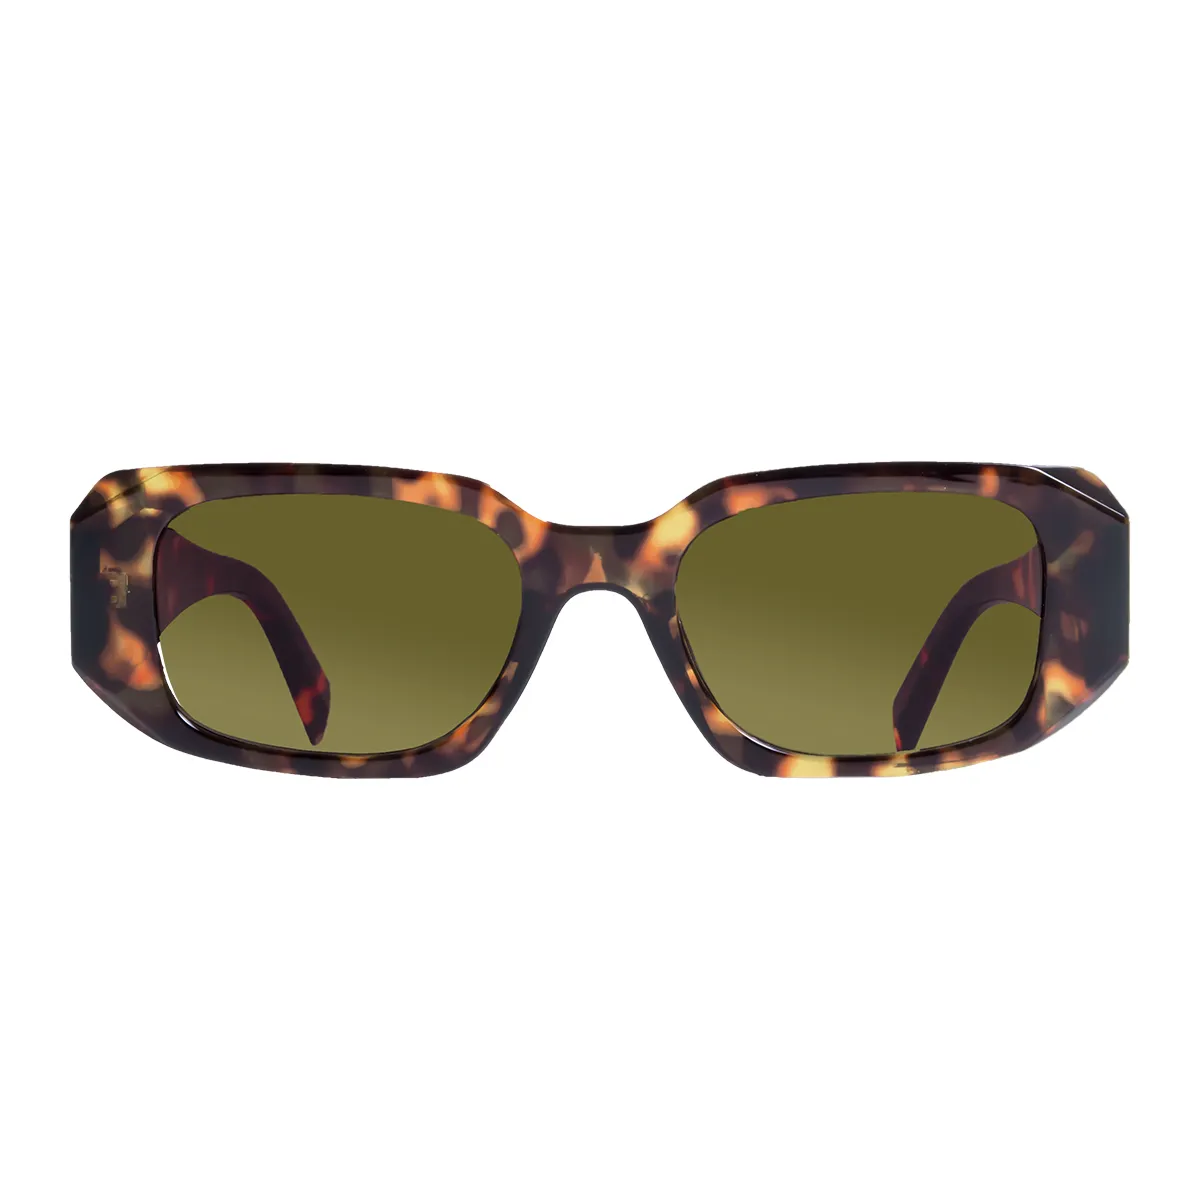 Arianwen - glasses Tortoisehell Sunglasses for Women